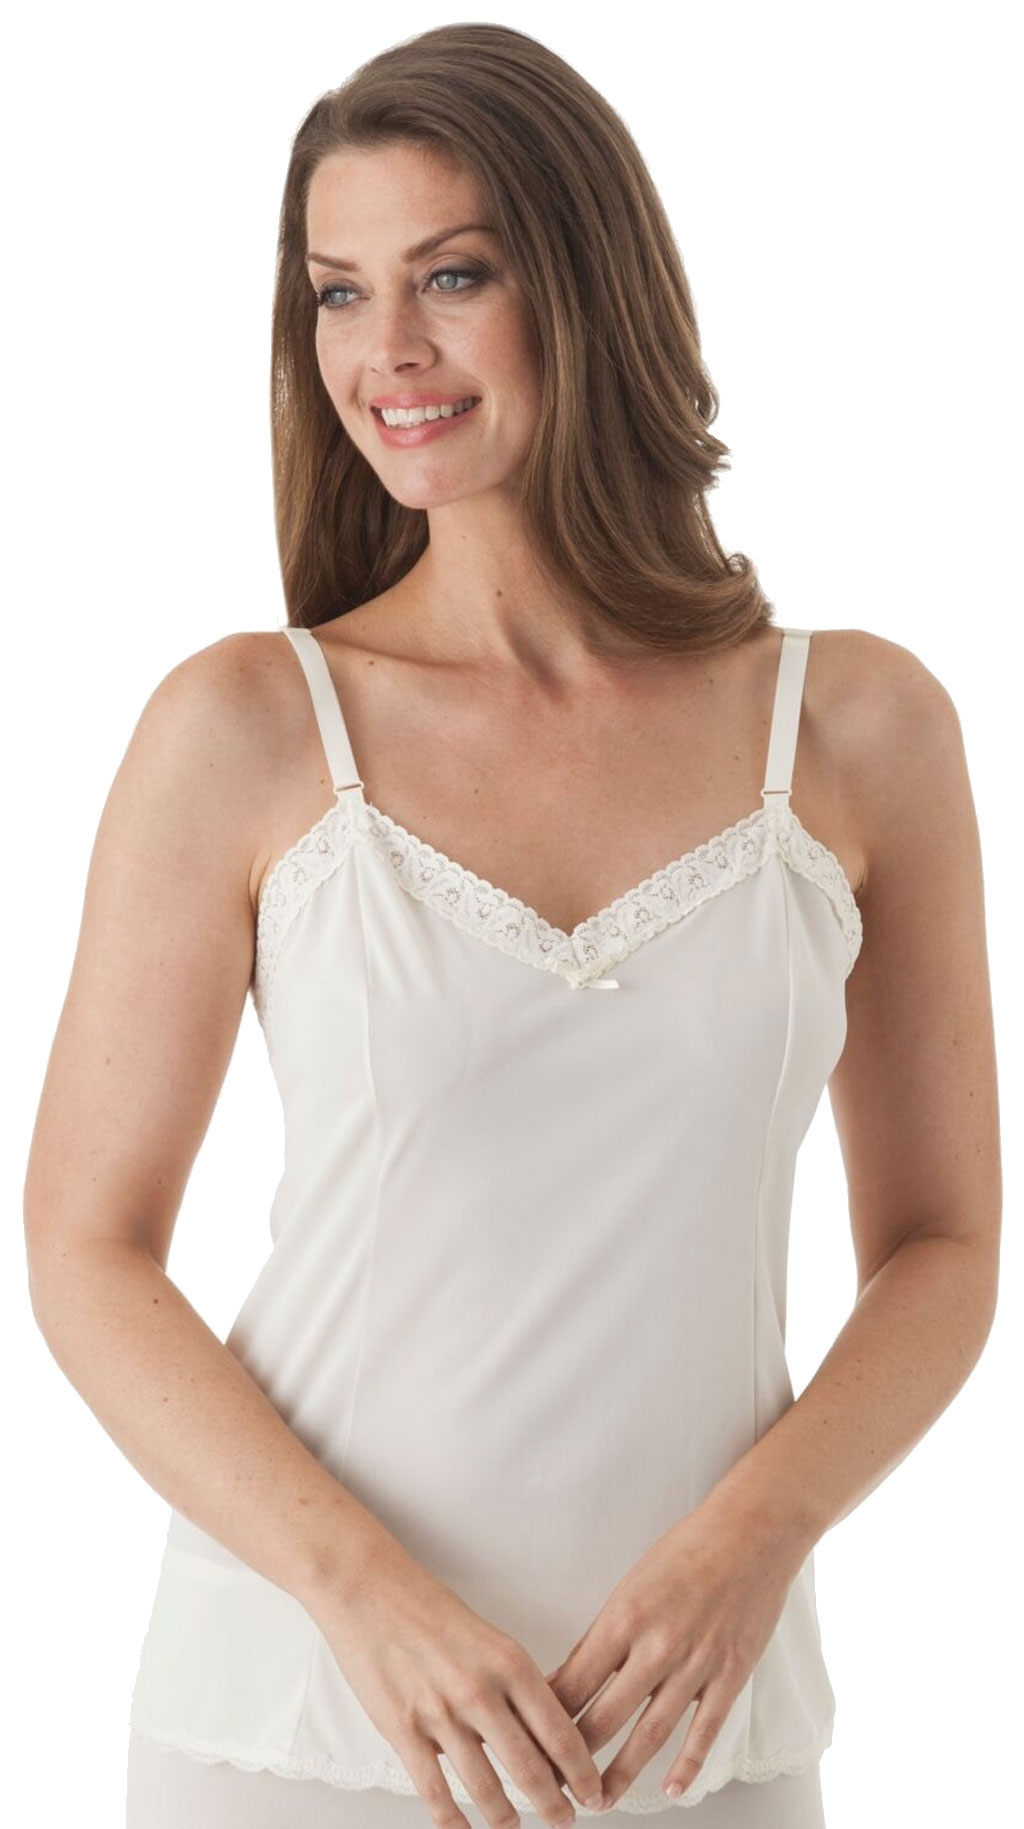 Crepeon Women's Cotton Camisole Ladies Slip Adjustable Strap